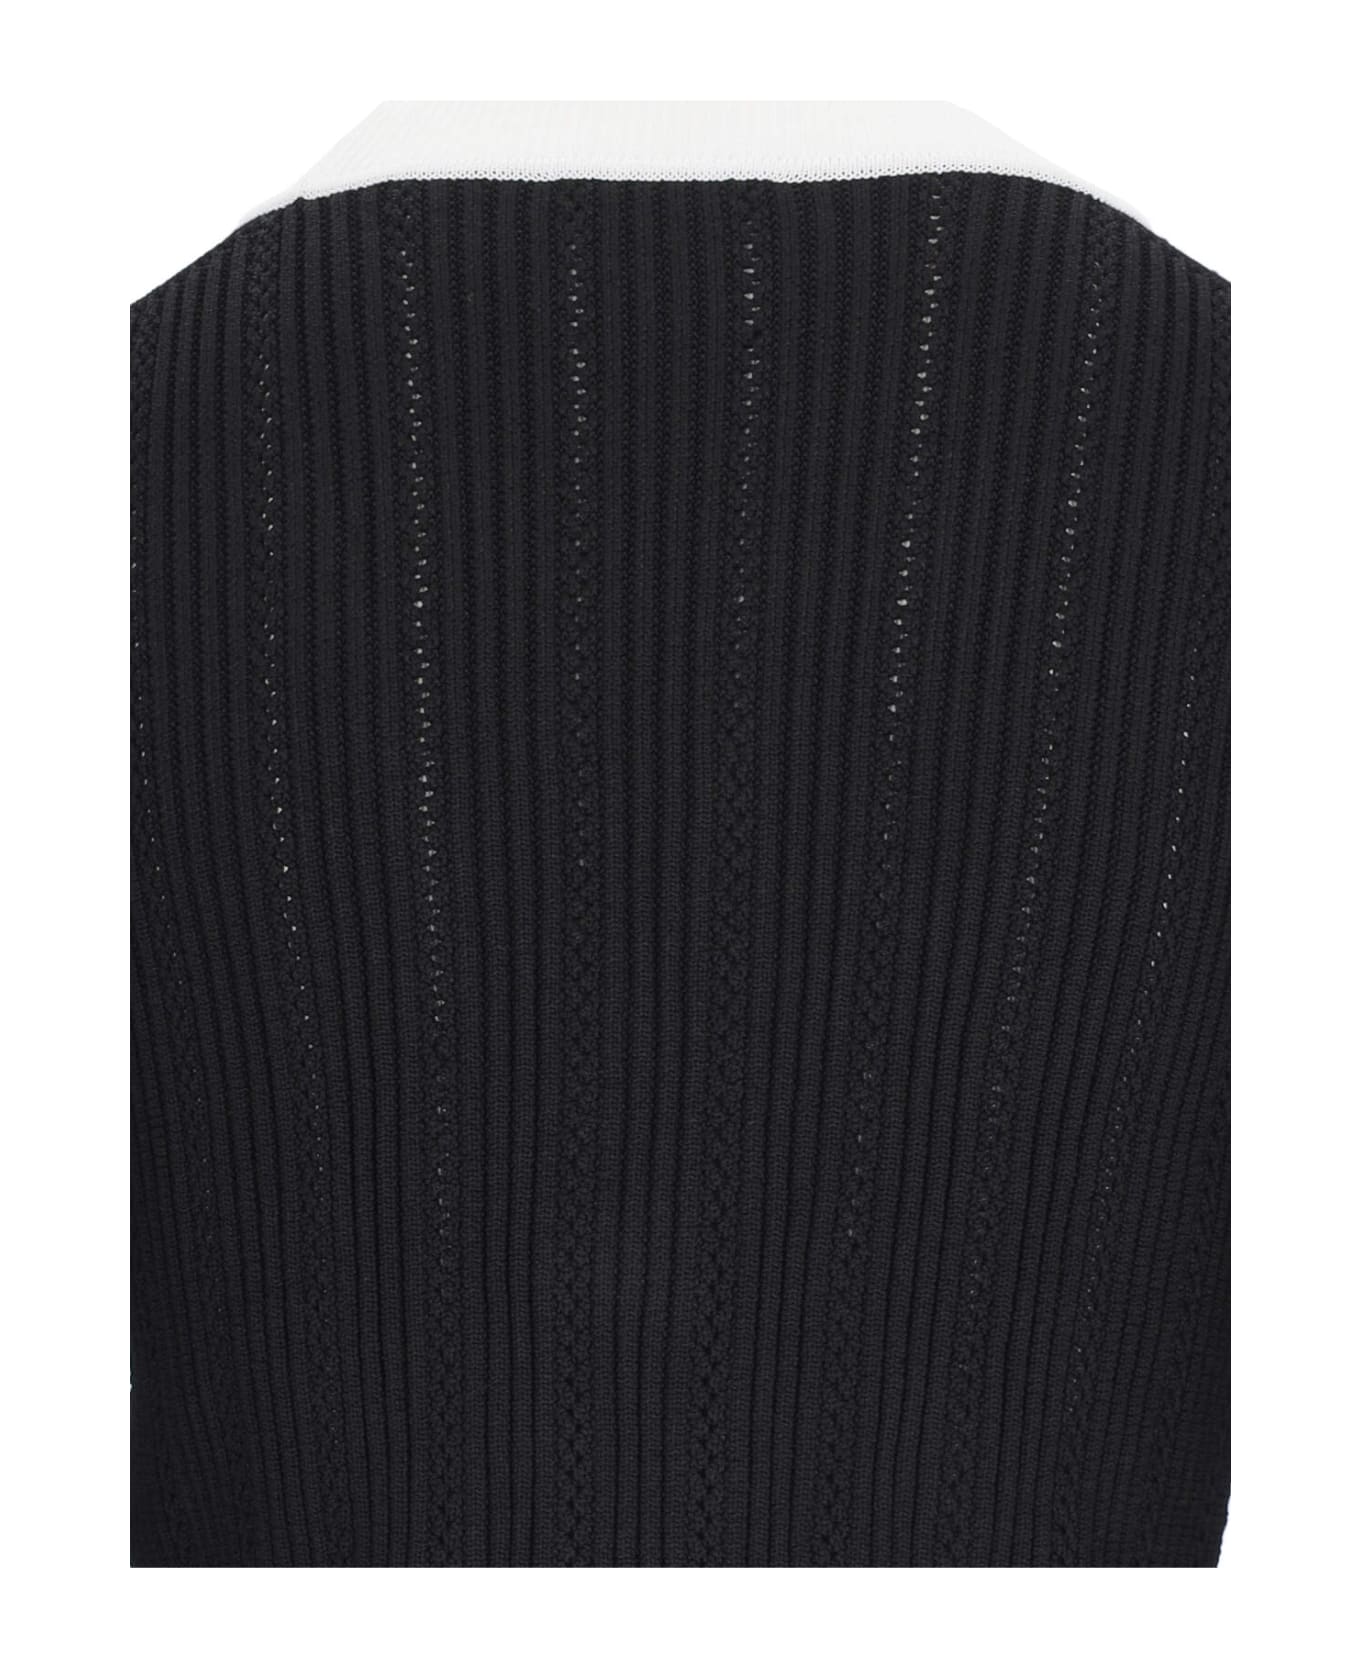 Balmain Knit Cropped Cardigan - Black   カーディガン